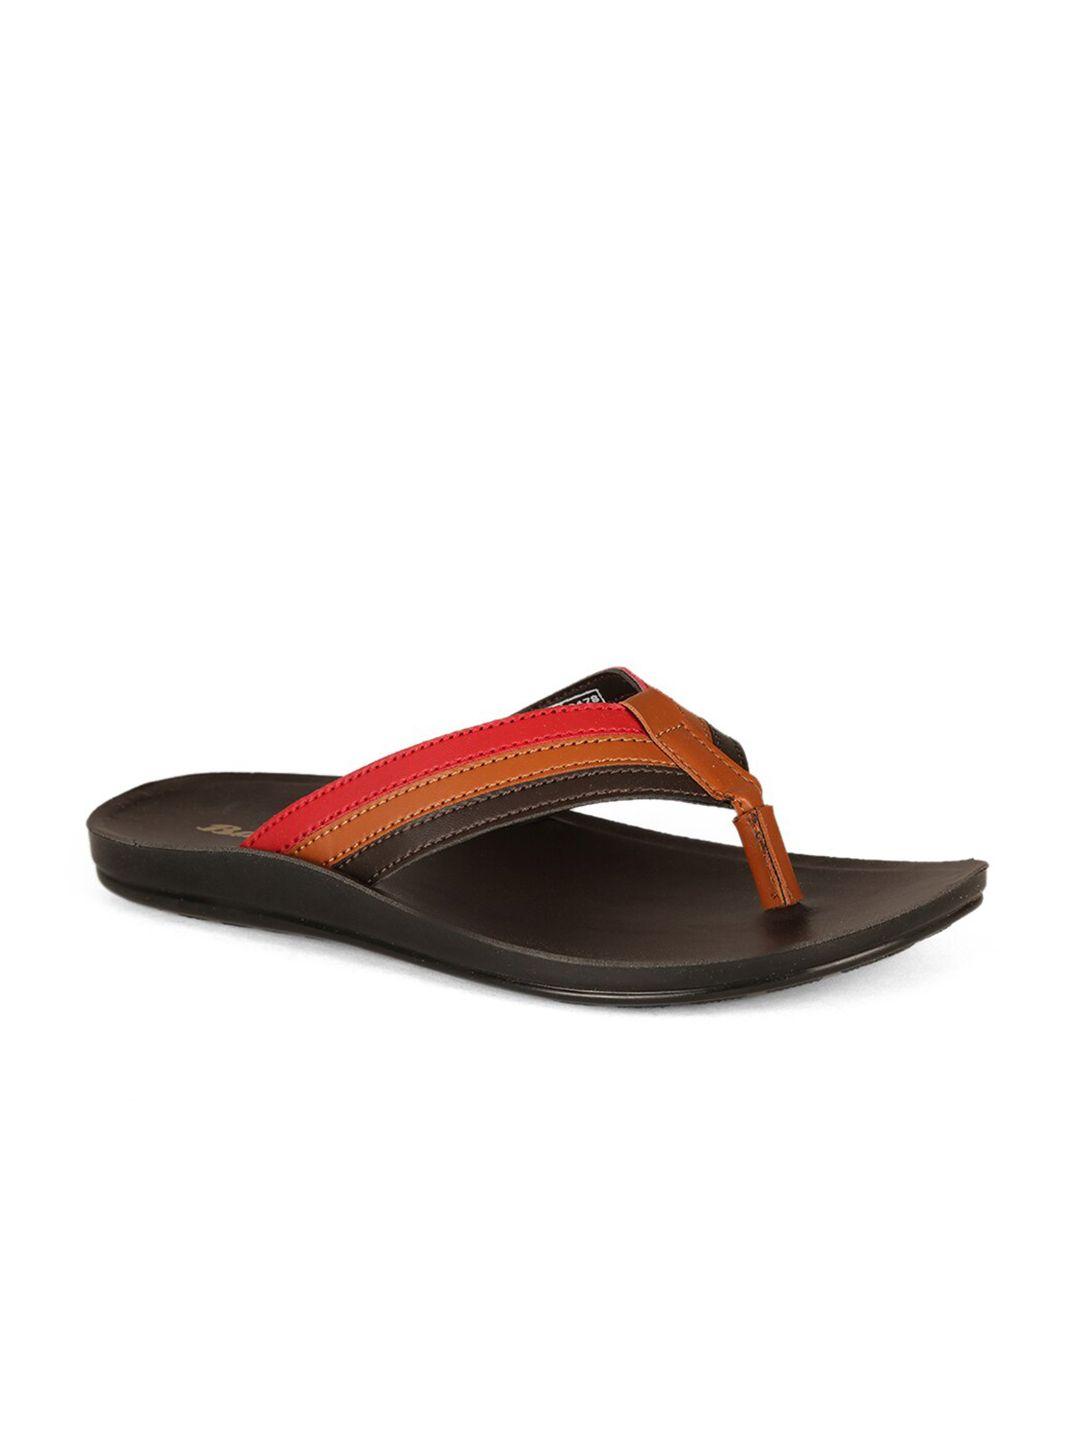 bata boys brown & red thong sandals